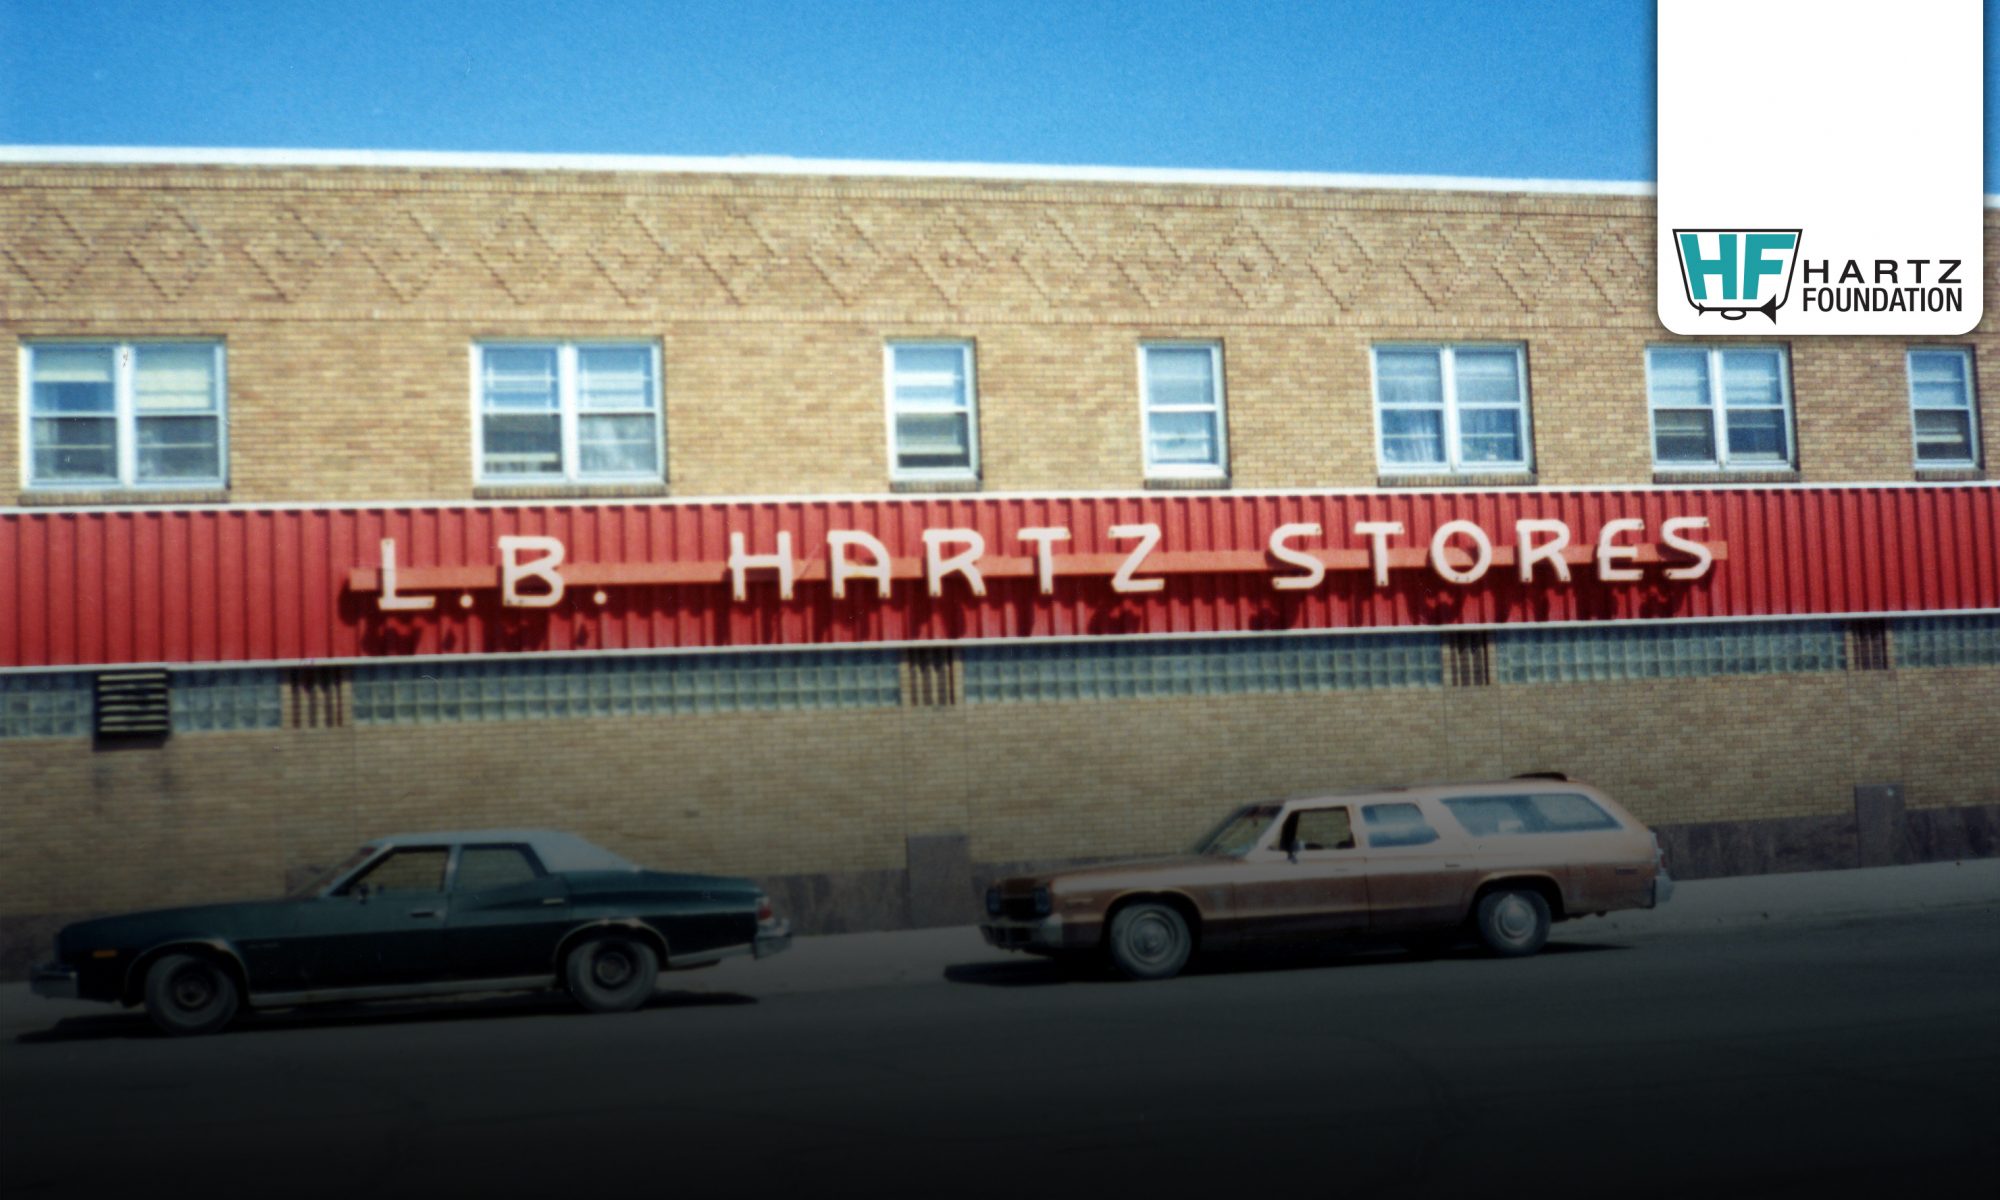 Hartz Foundation